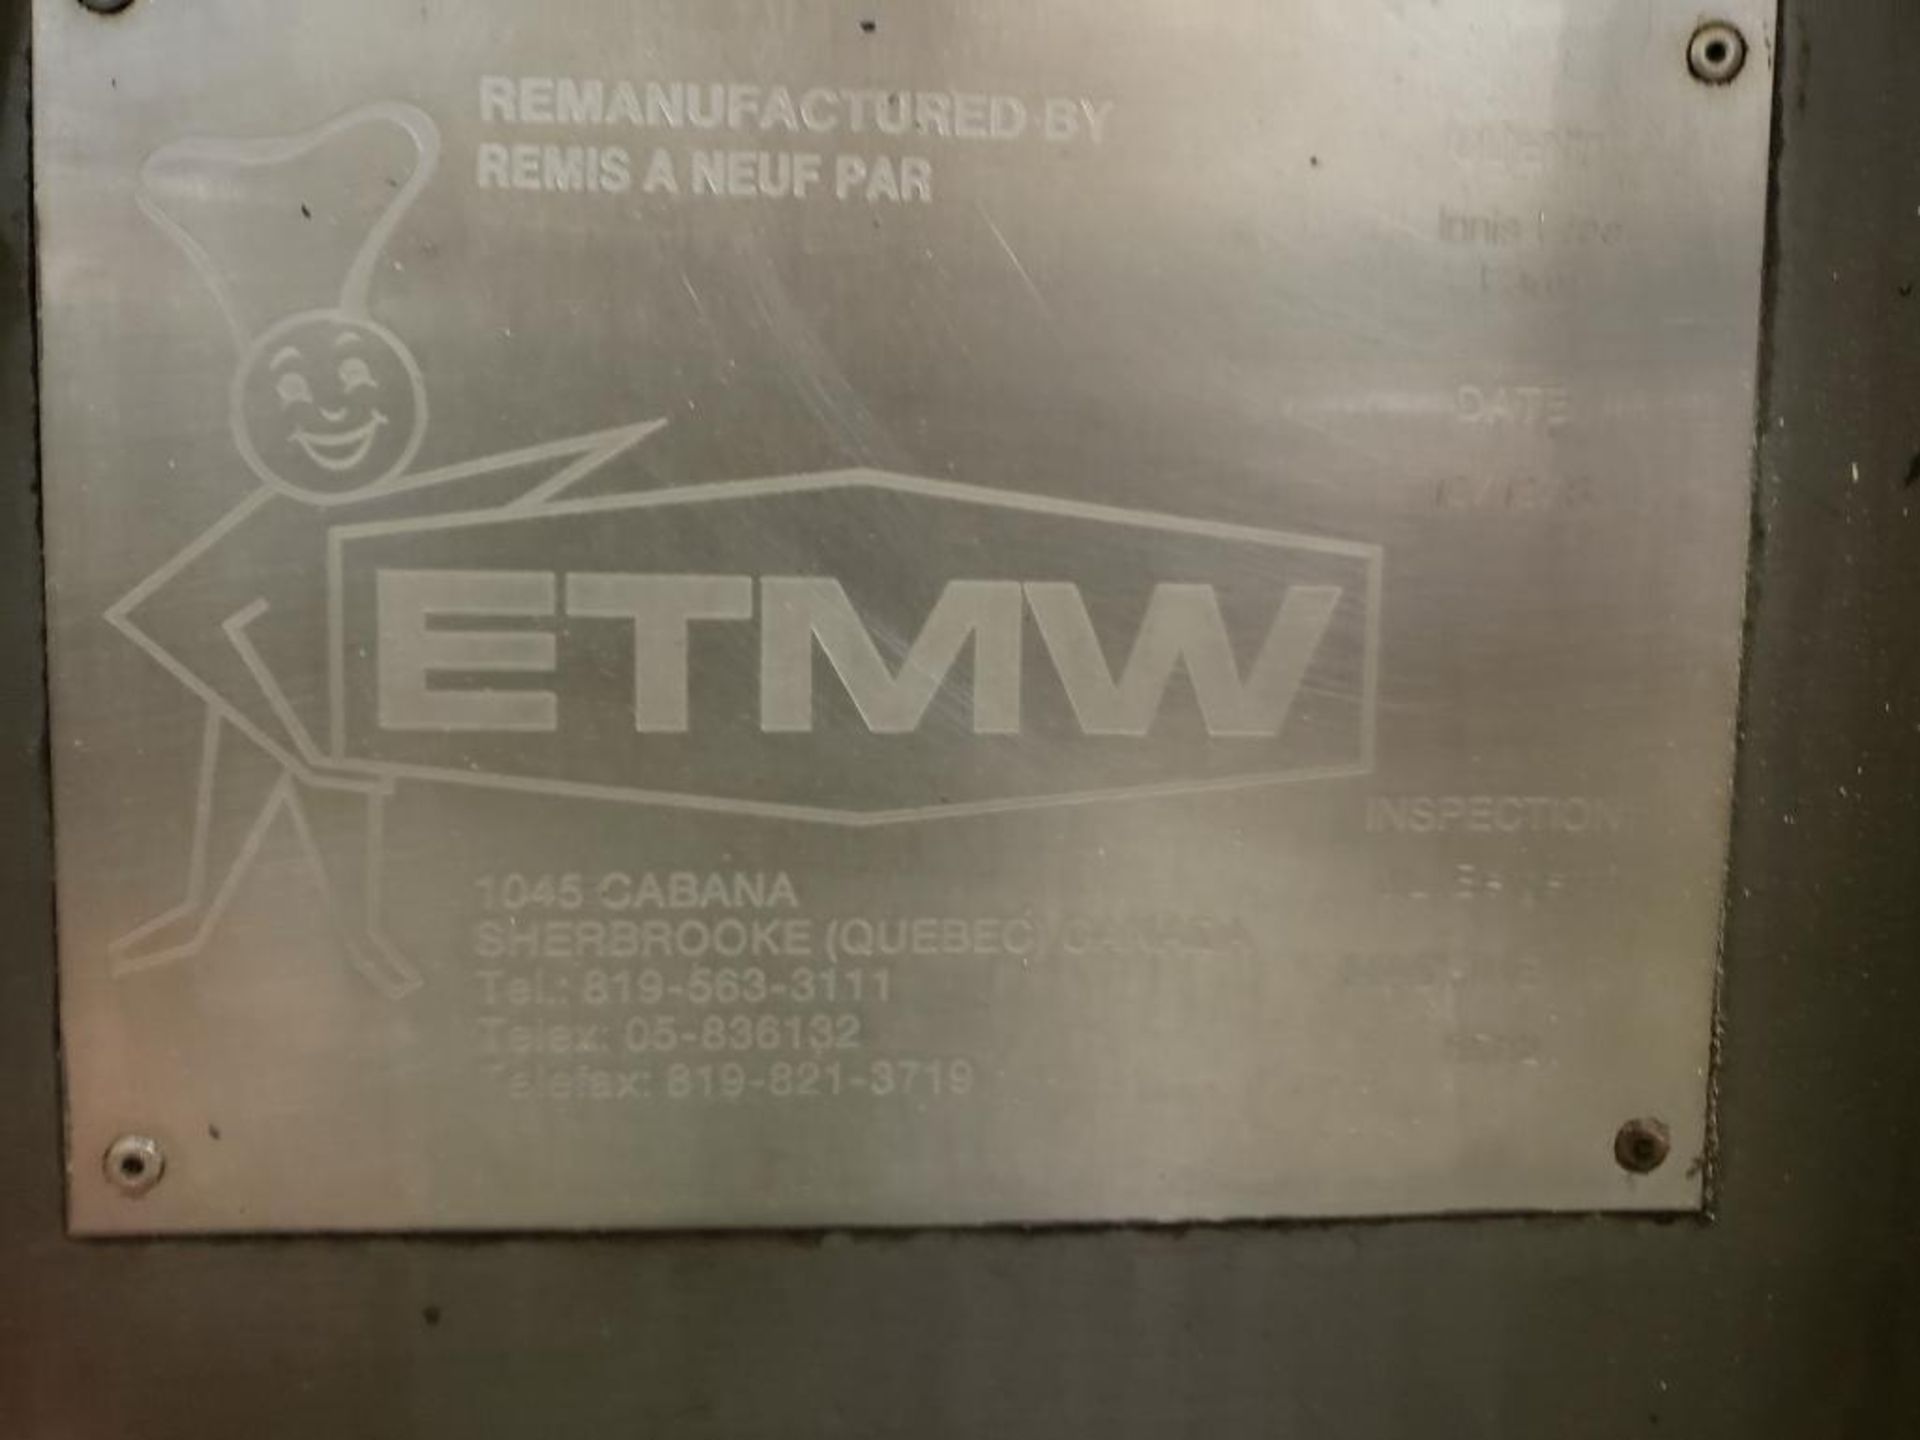 ETMW Bagger - Image 2 of 3